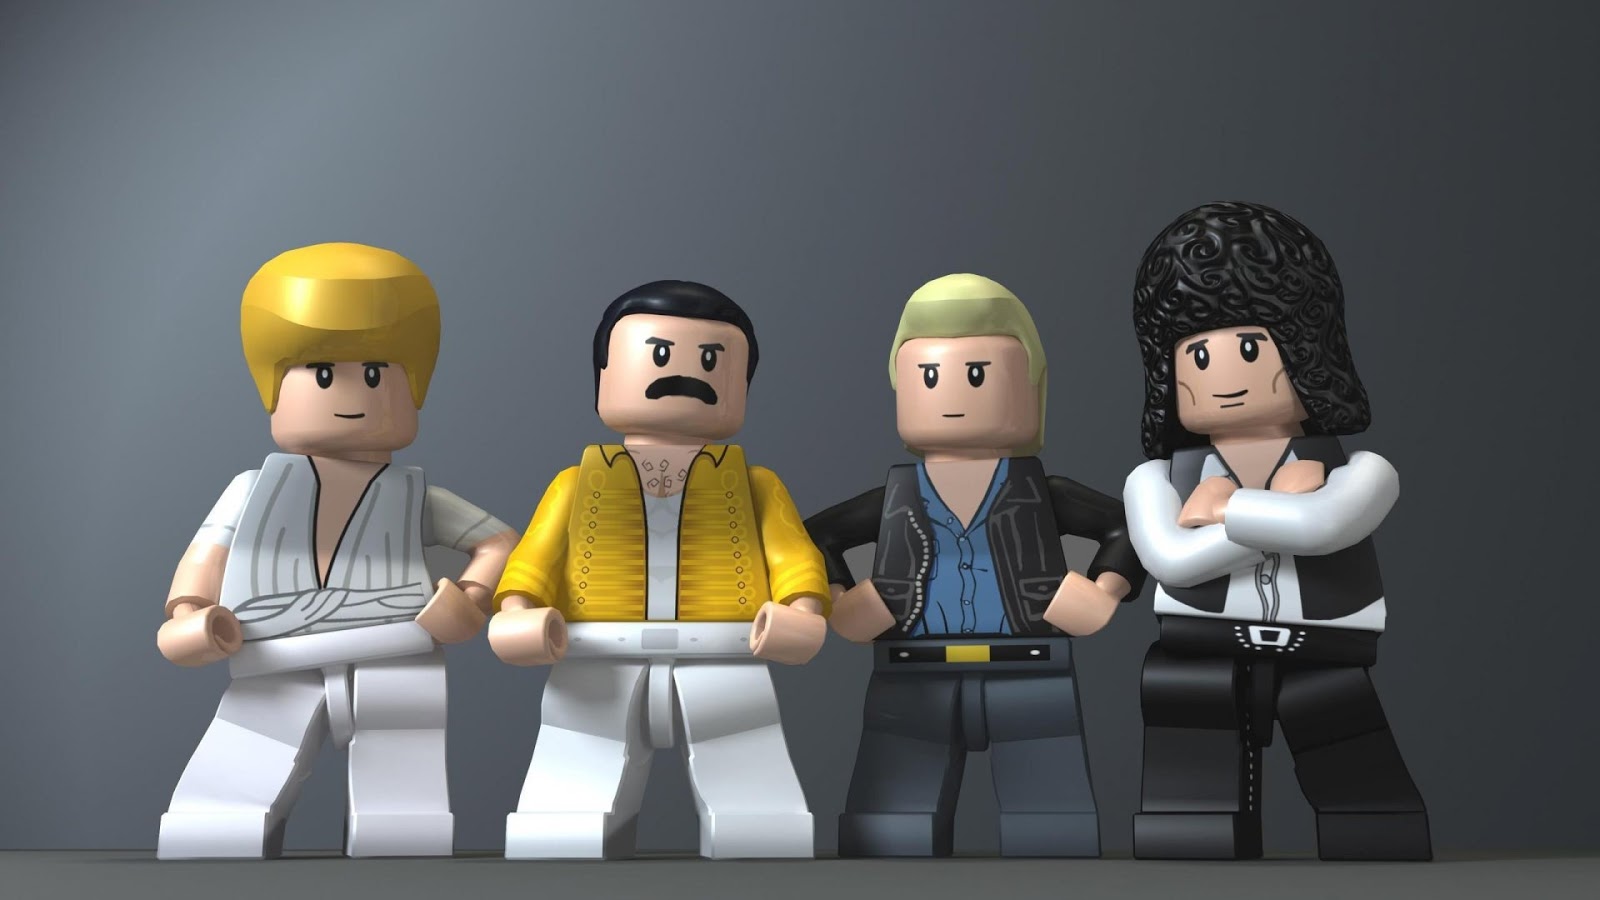 Queen Music Band Lego - Queen Lego - HD Wallpaper 